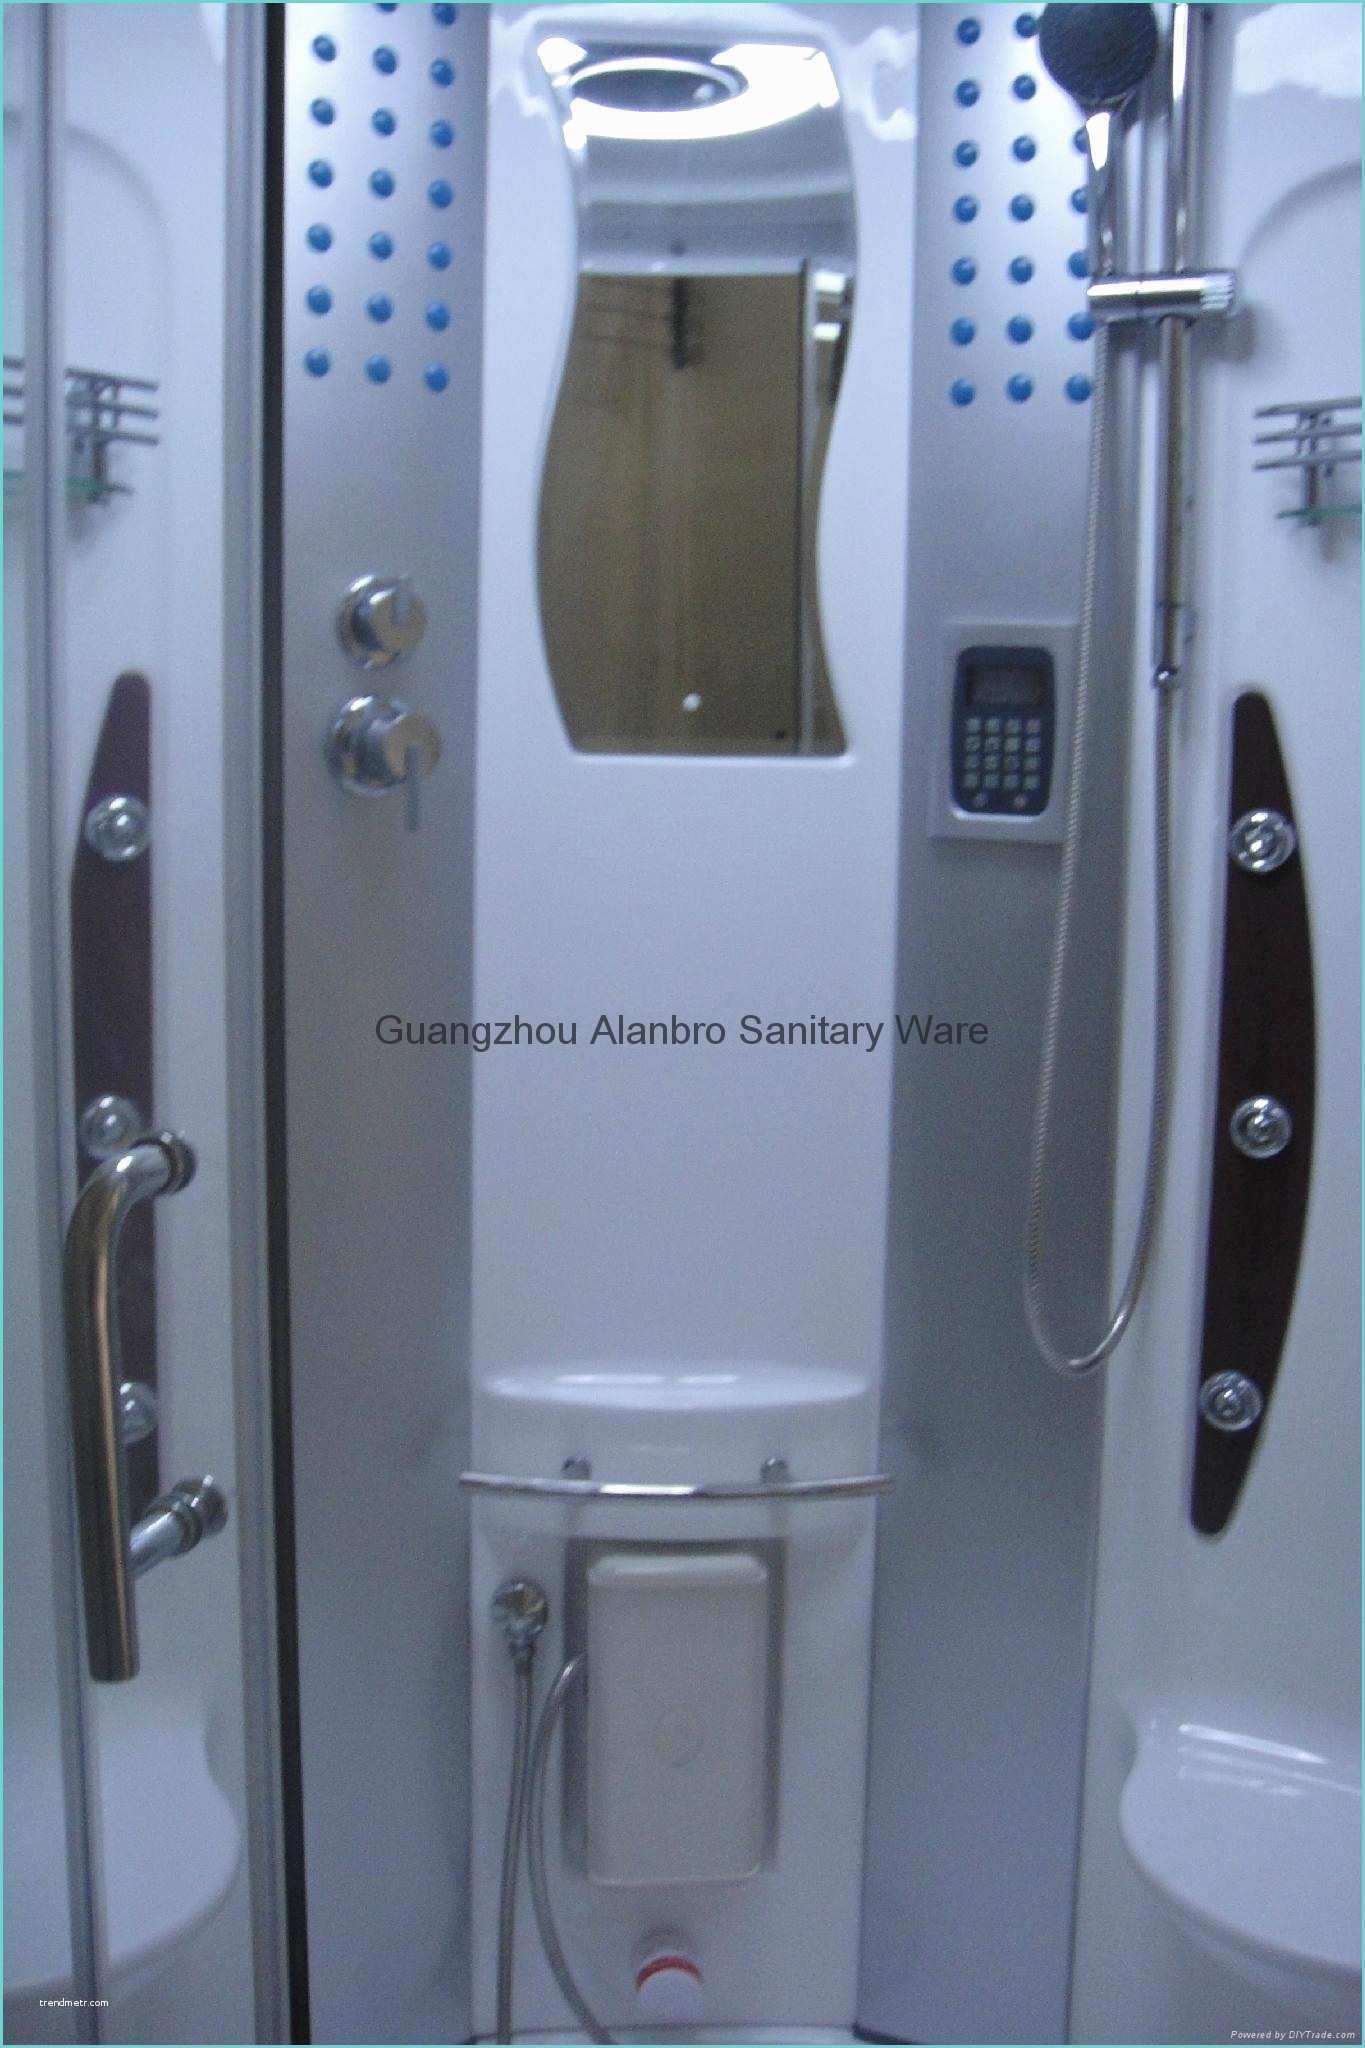 China Acrtlic Douche Steam Shower Carbin with Bathtub Suppliers Acrylic White Shower Steam Cabin Massage Shower Room G248